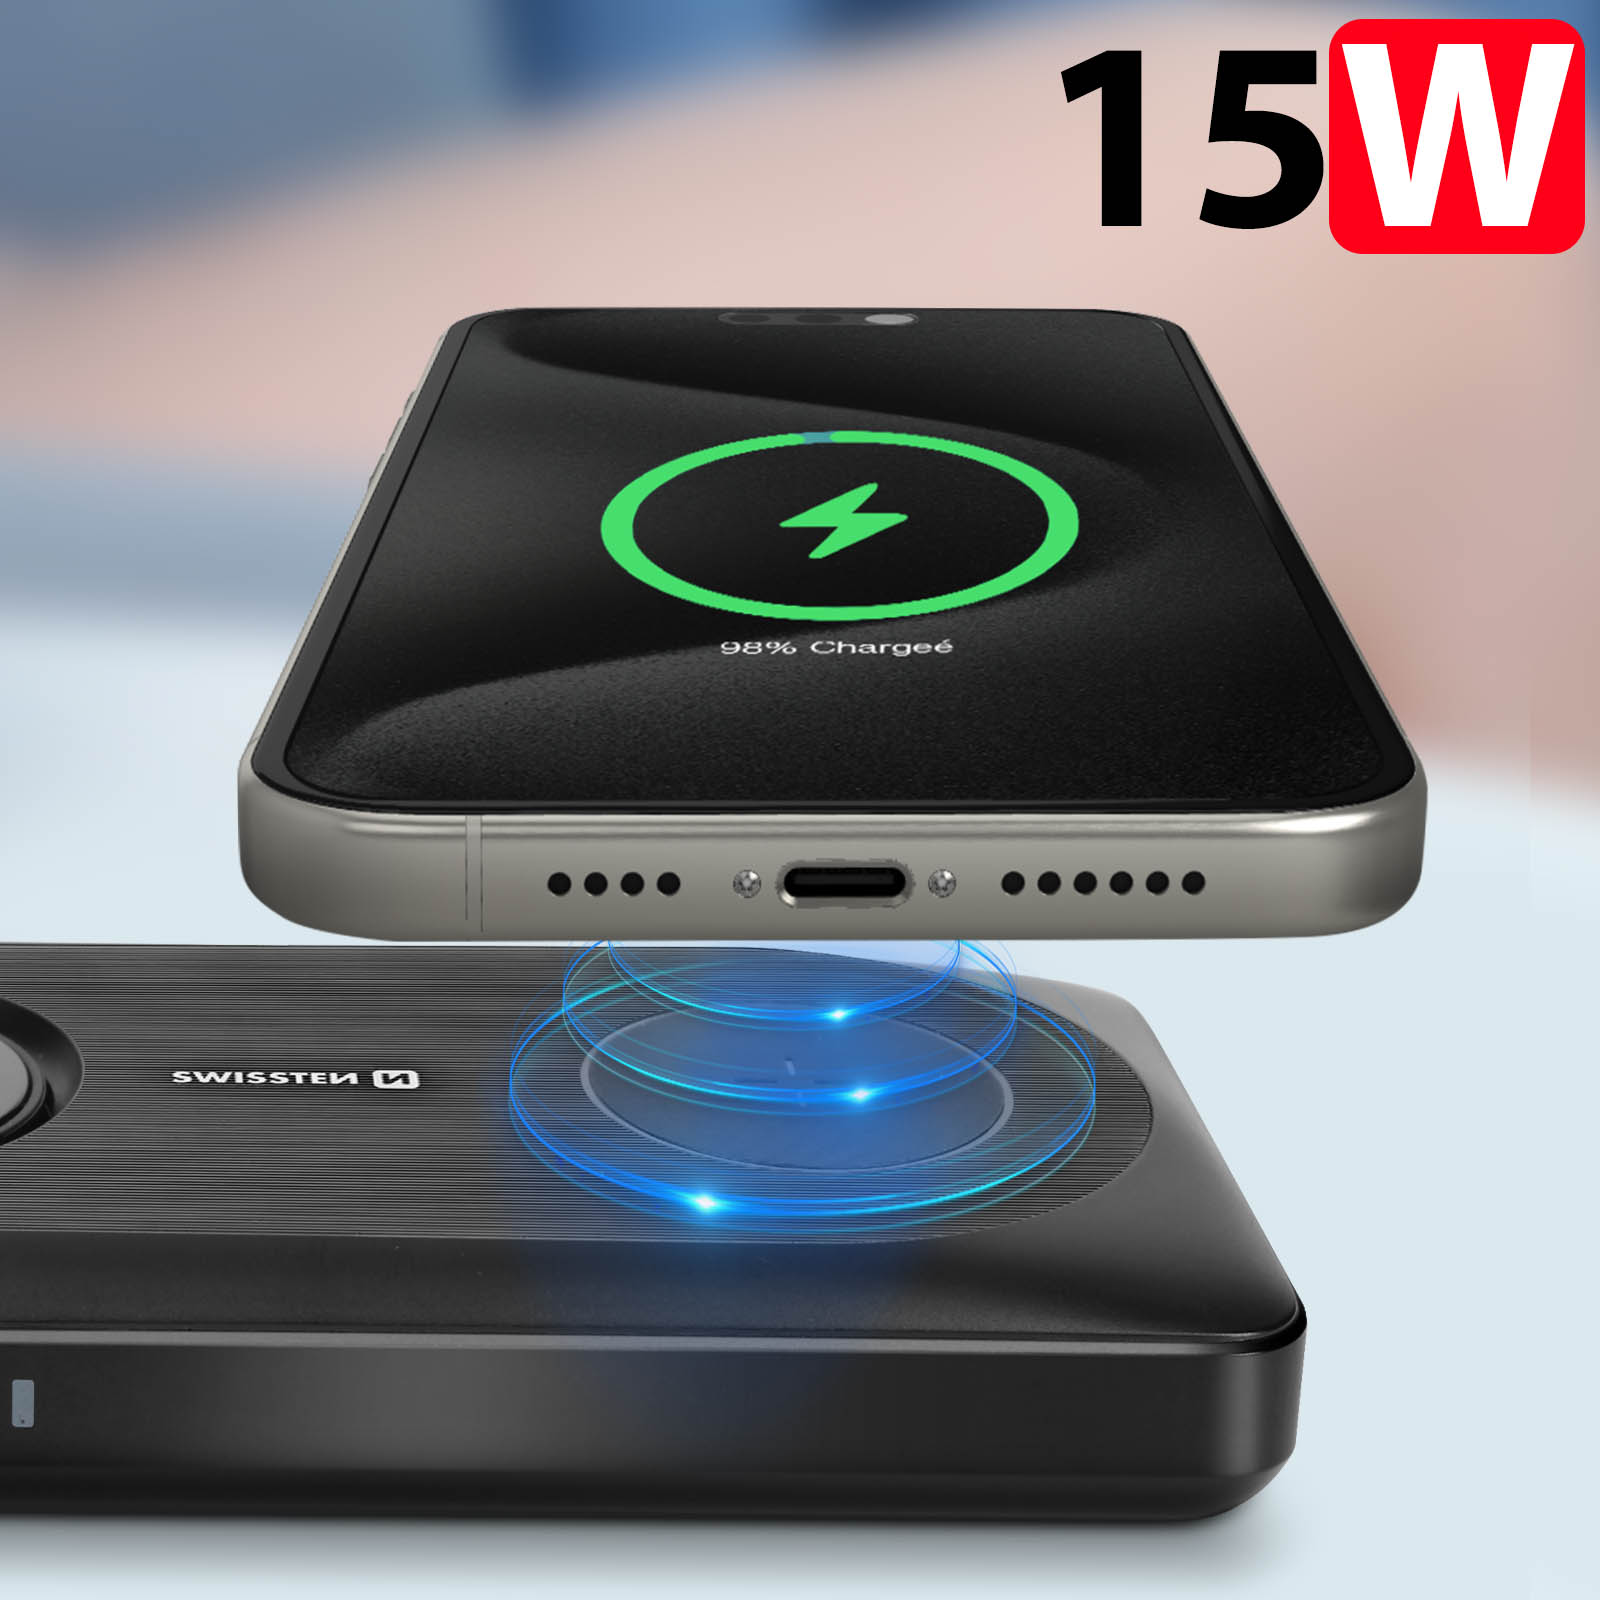 Batteria esterna senza fili da 15W per iPhone e Apple Watch, USB + USB-C -  Swissten - Italiano